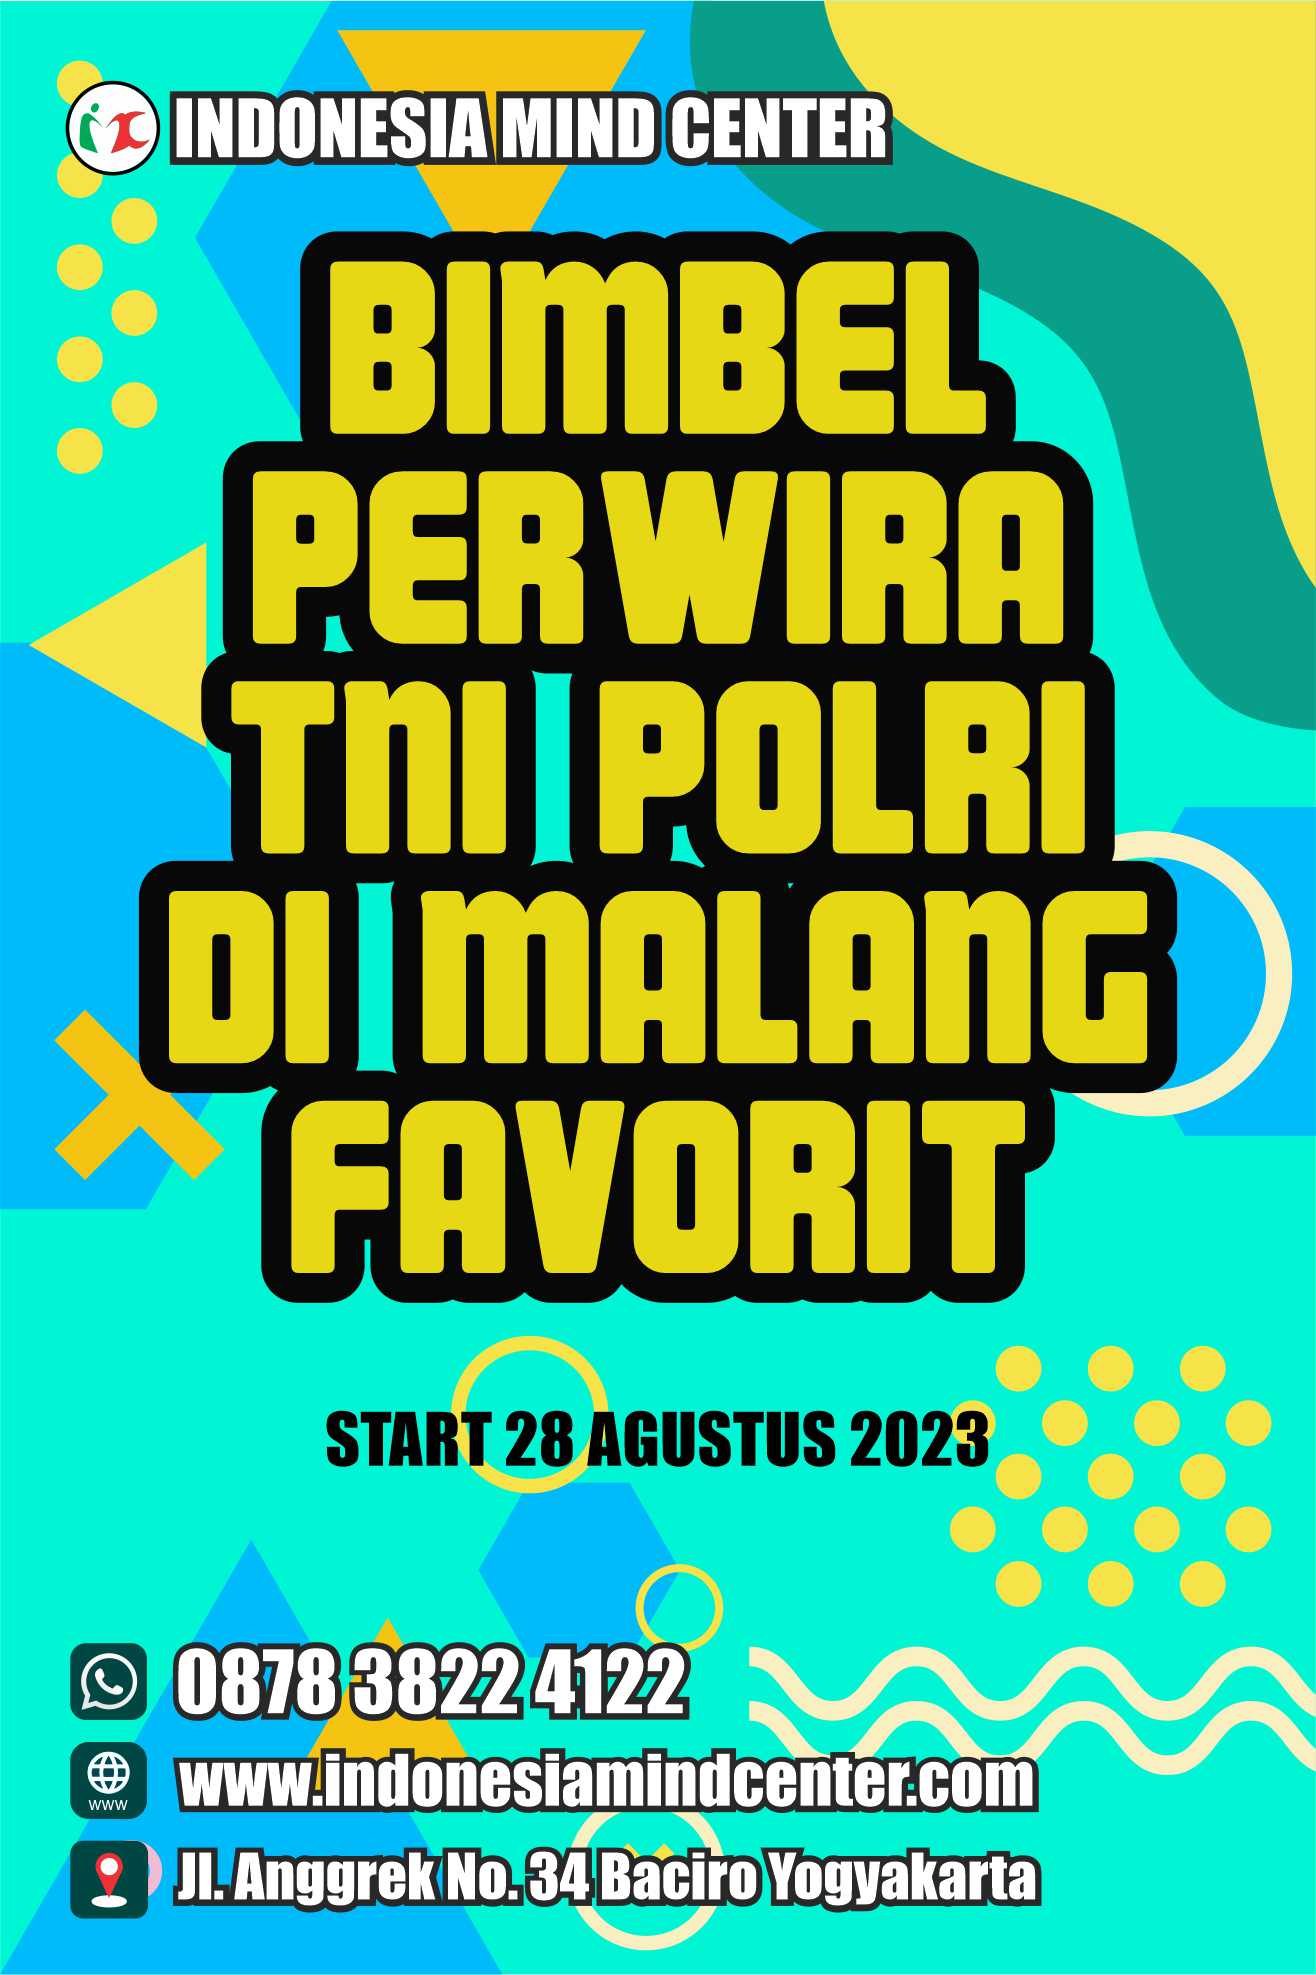 BIMBEL PERWIRA TNI POLRI DI MALANG FAVORIT START 28 AGUSTUS 2023